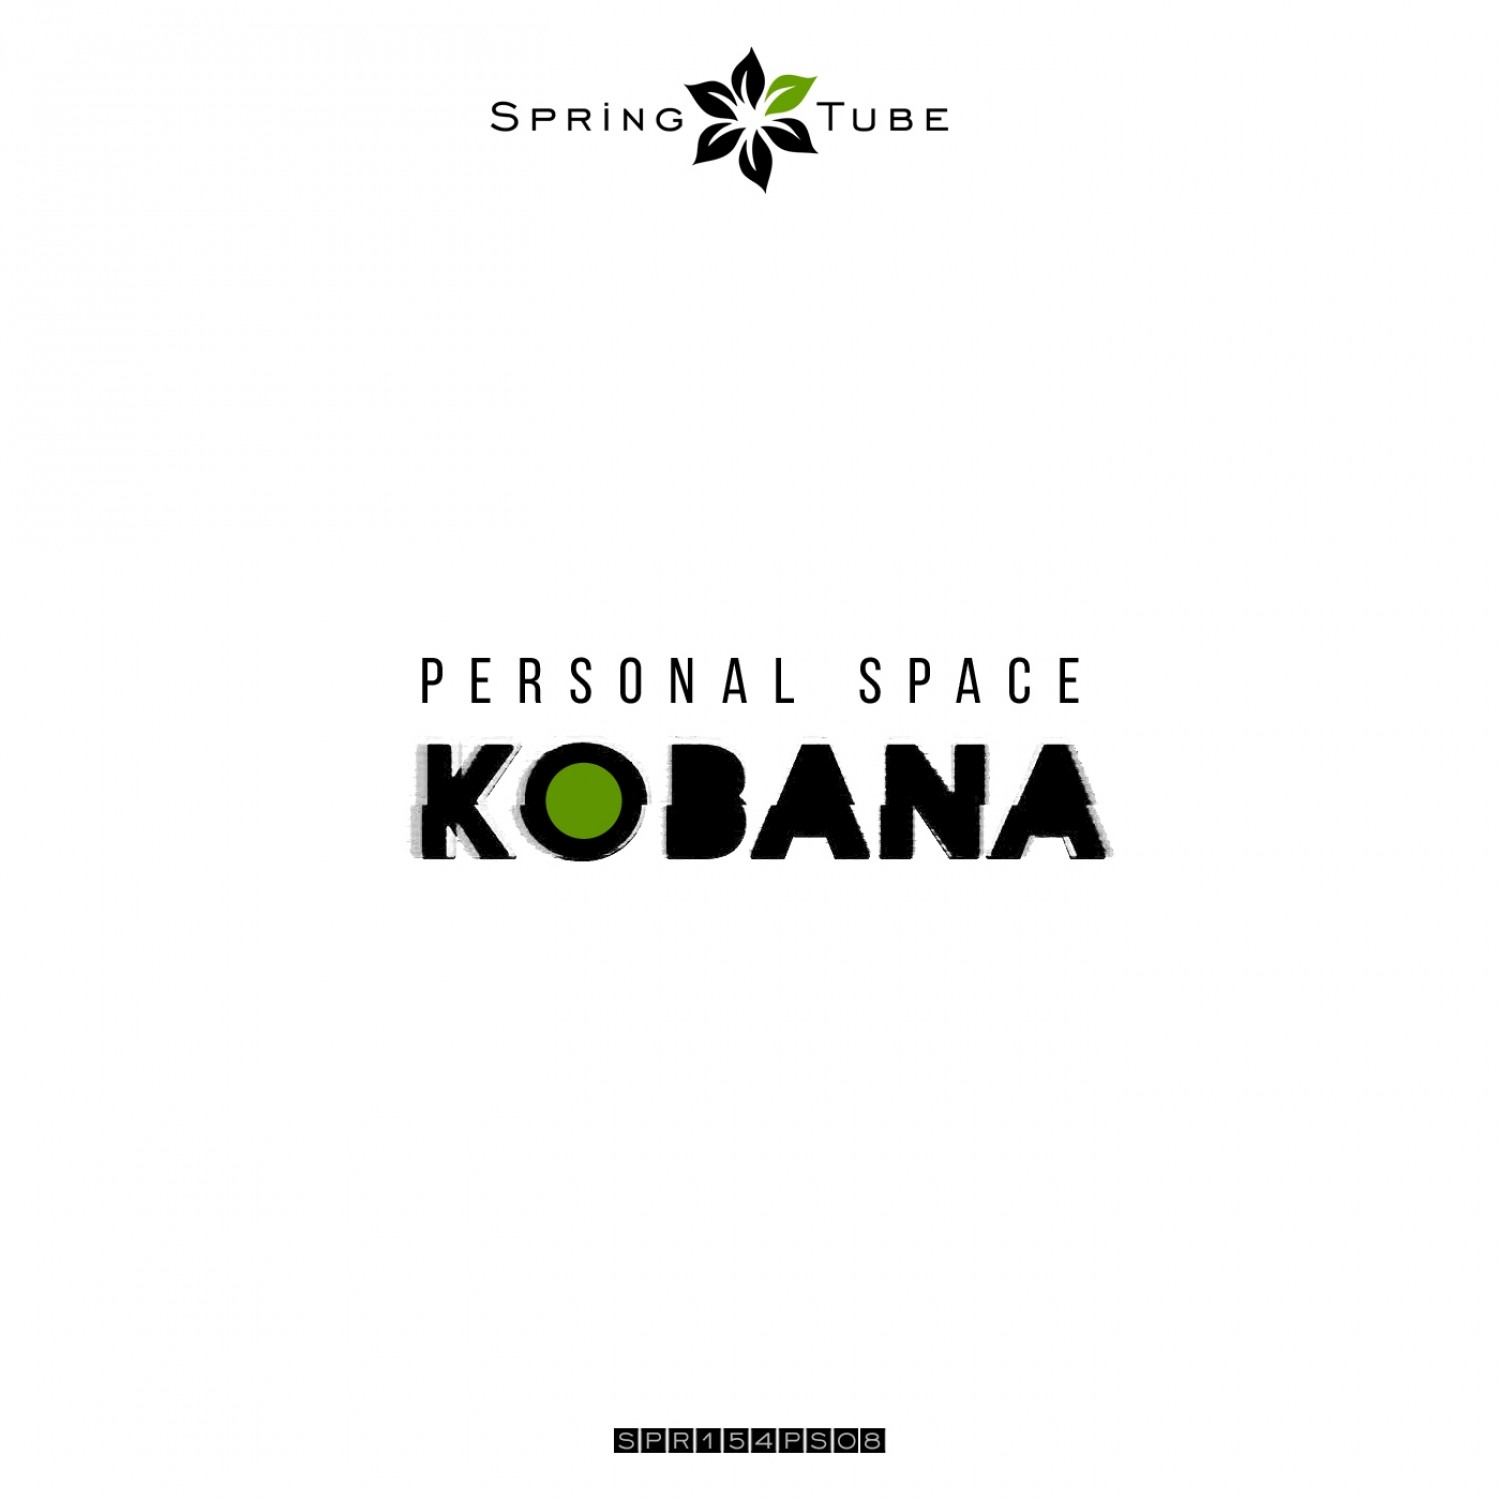 Personal Space: Kobana